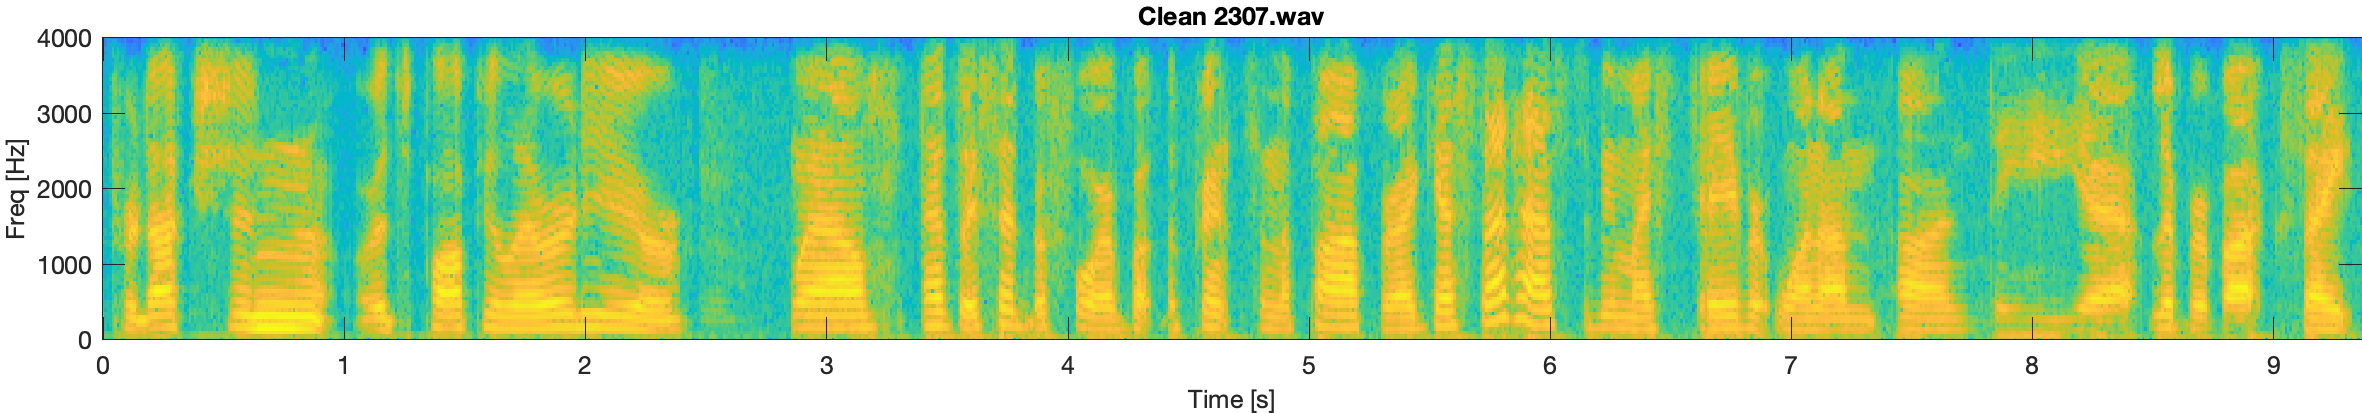 Clean spectrogram 2307.wav